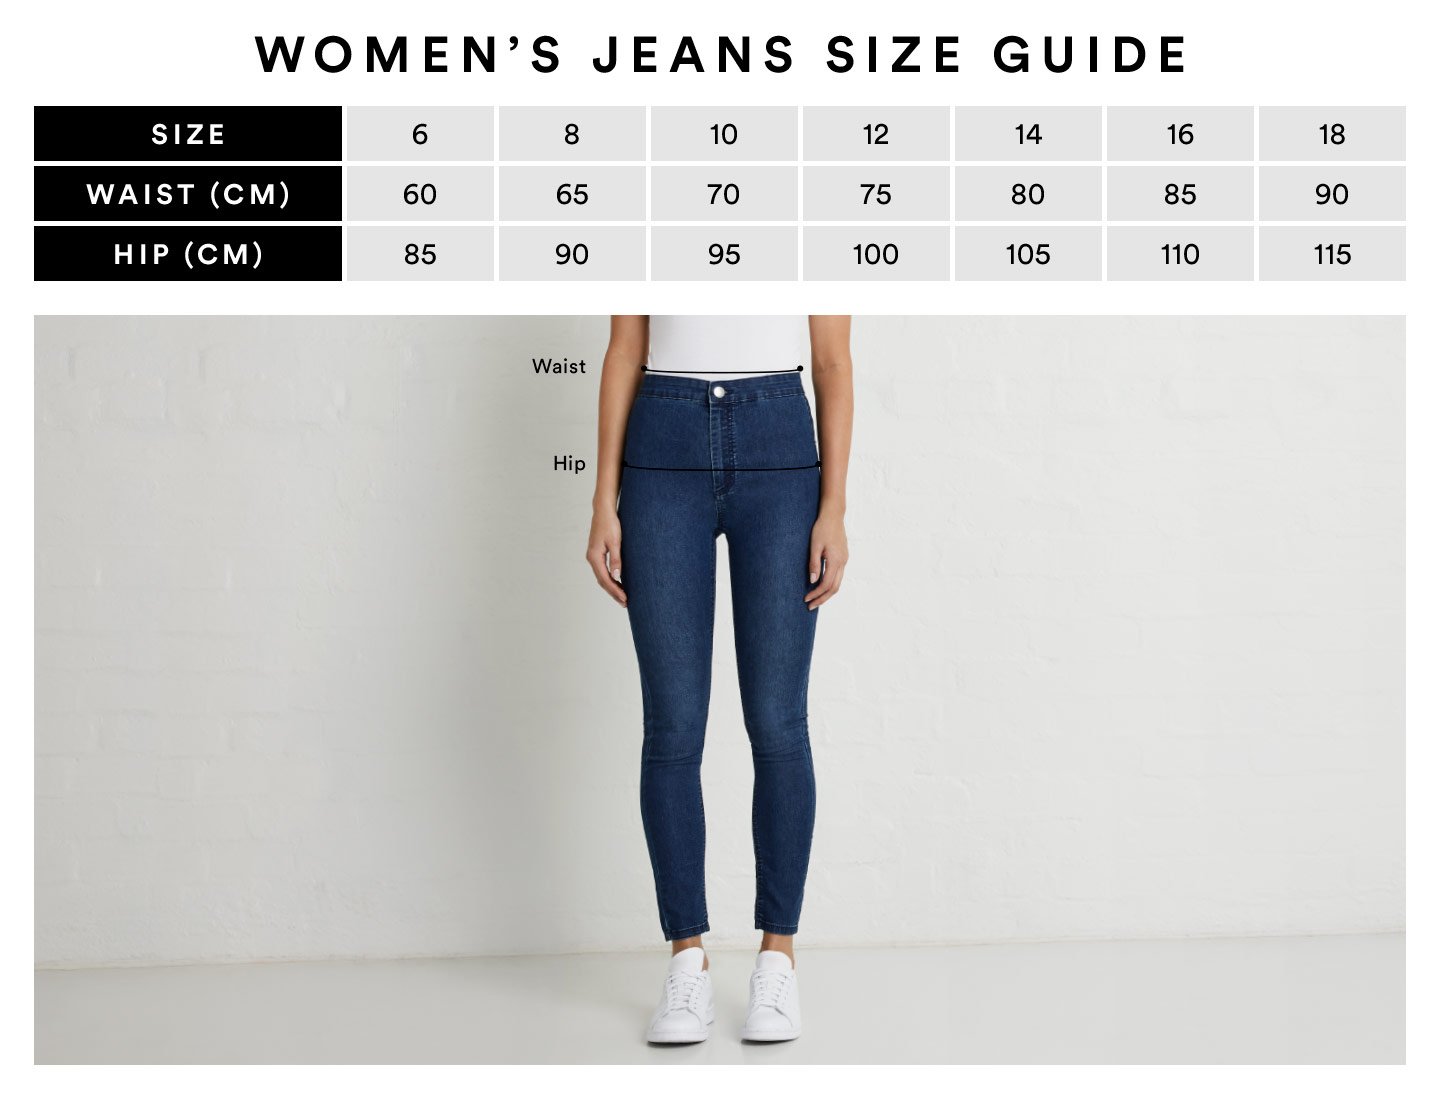 size 10 jeans waist size